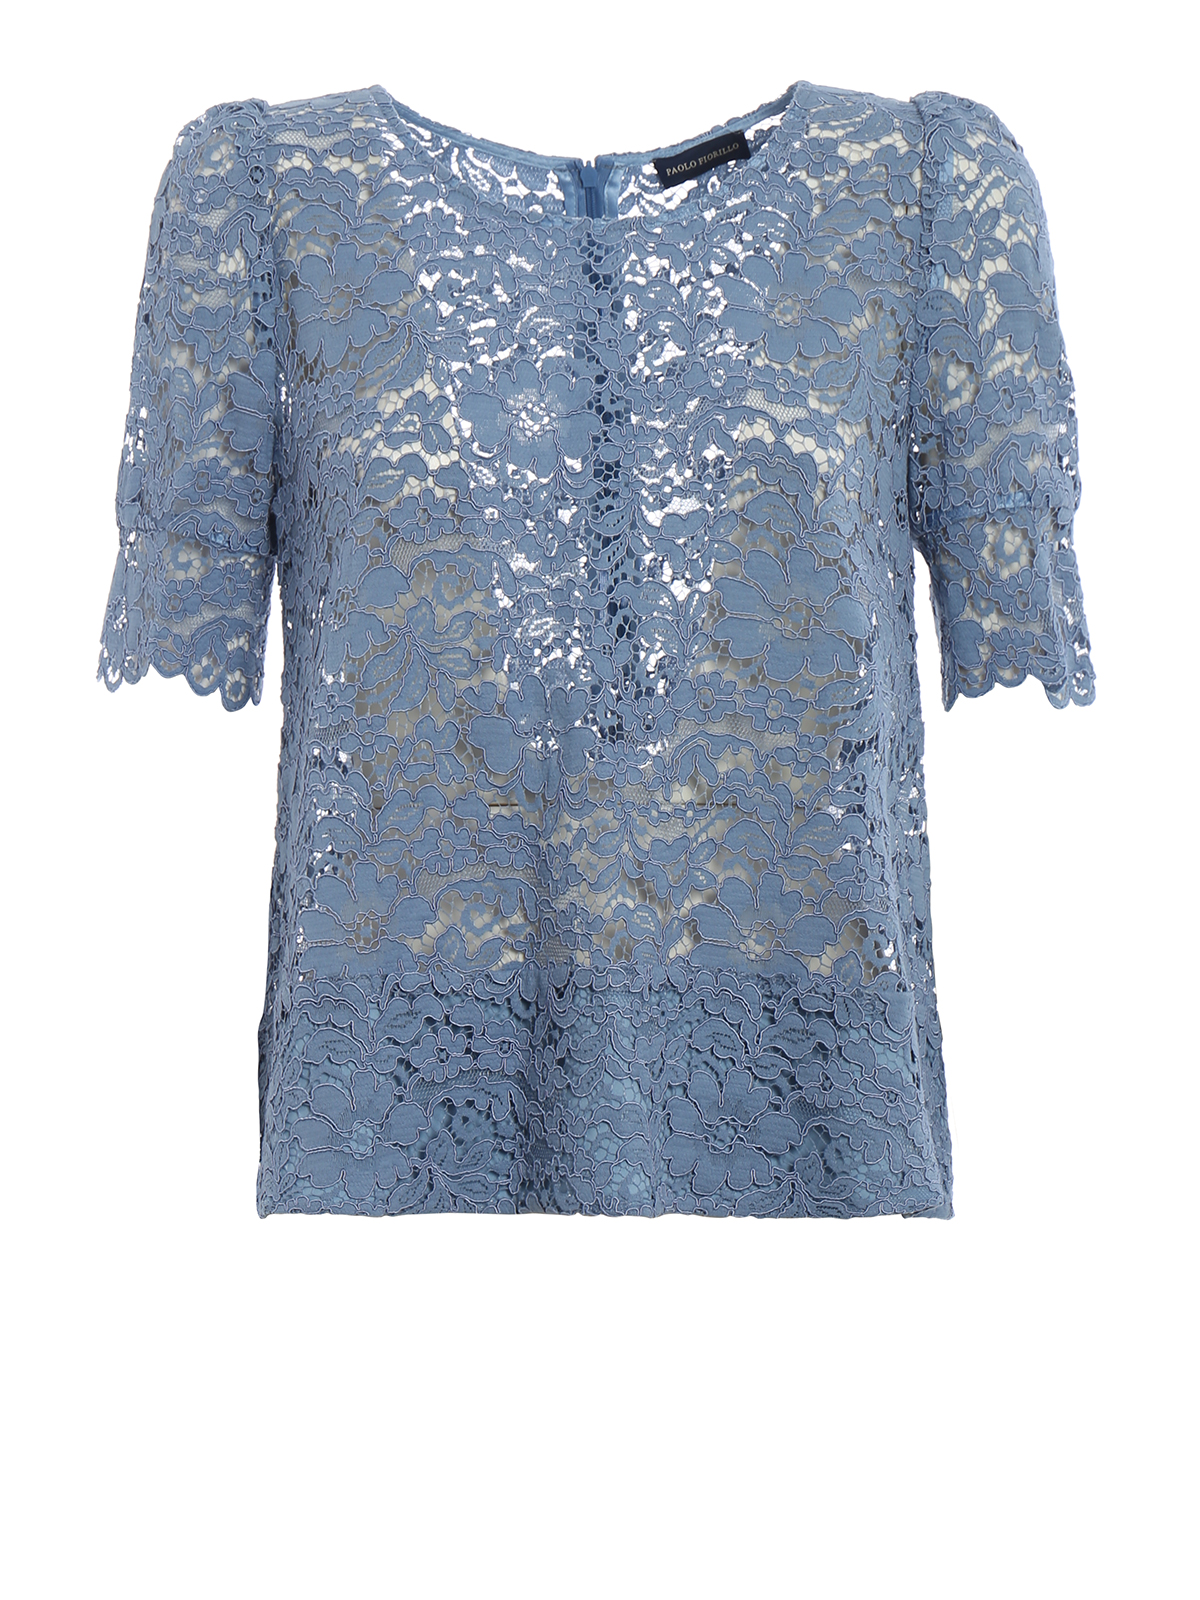 Blouses Paolo Fiorillo - Powder blue lace blouse